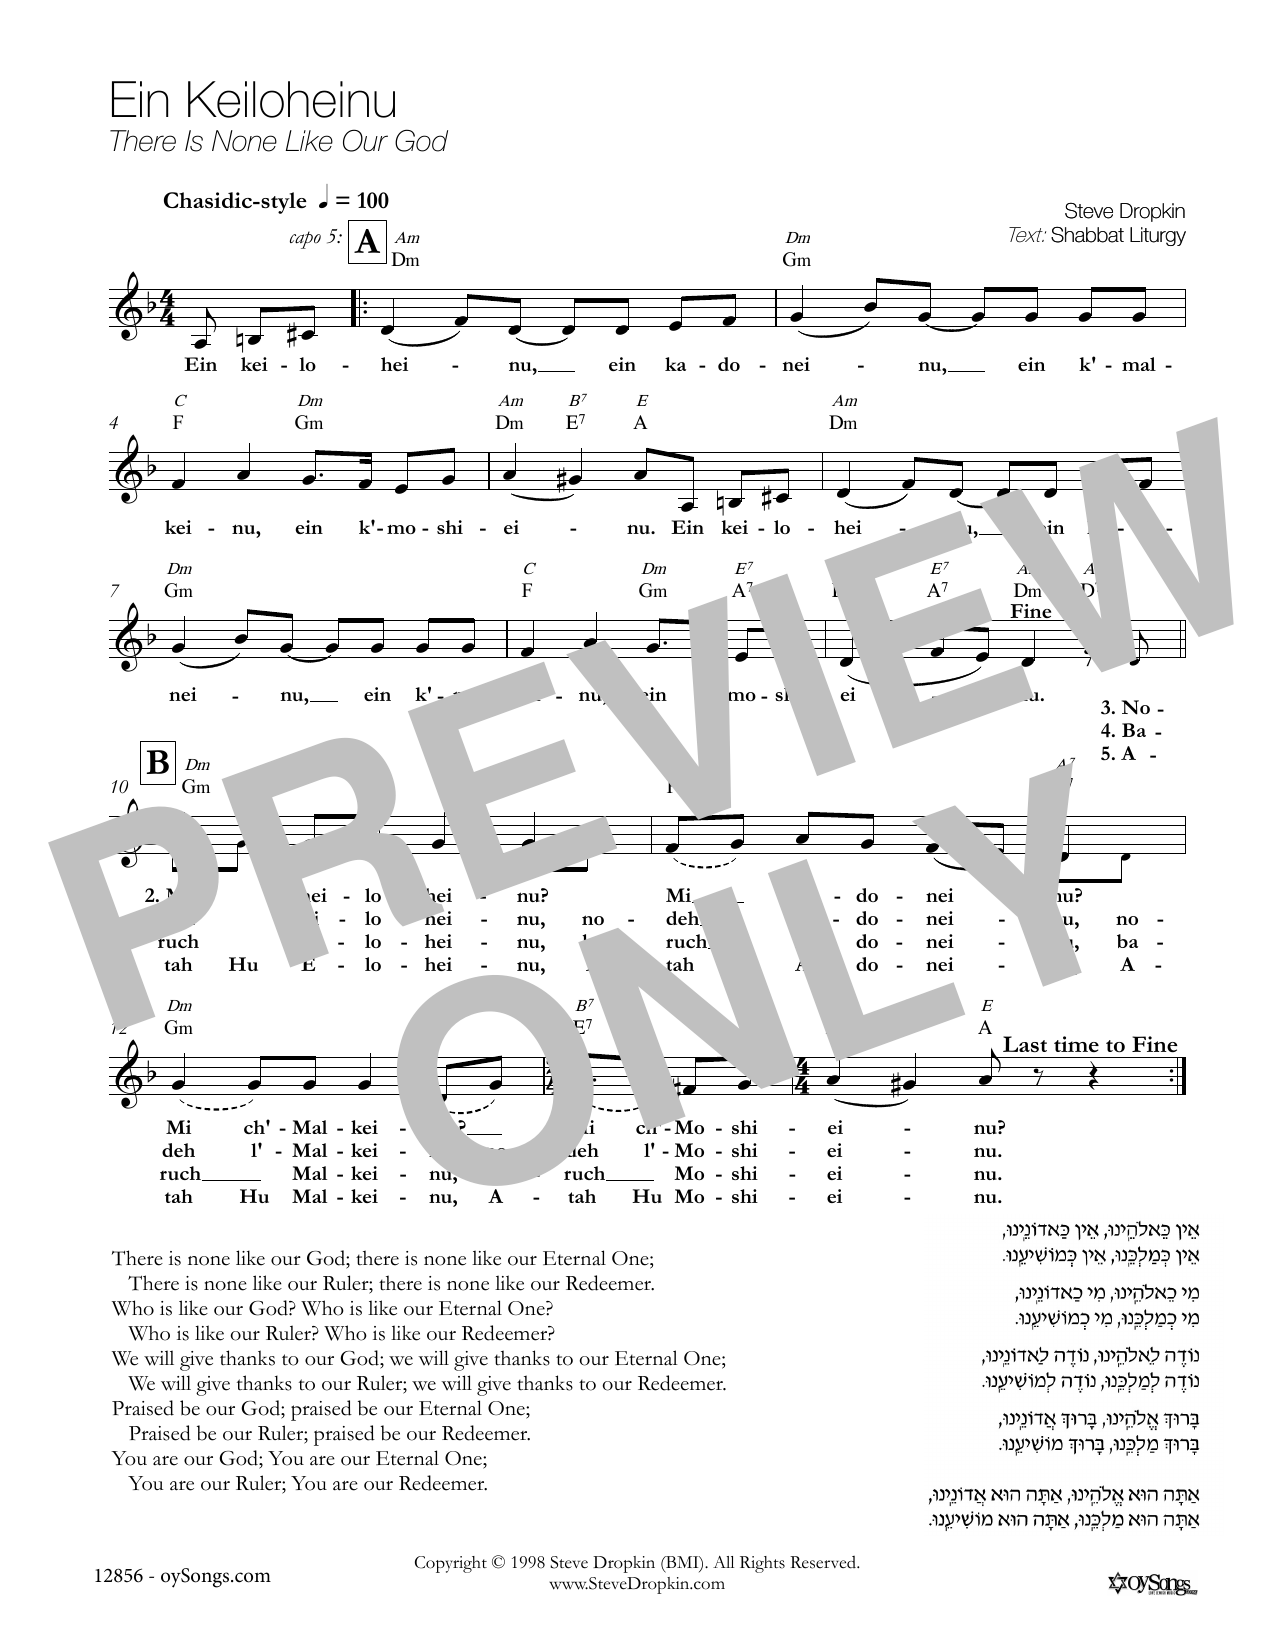 Steve Dropkin Ein Keiloheinu sheet music notes and chords arranged for Lead Sheet / Fake Book